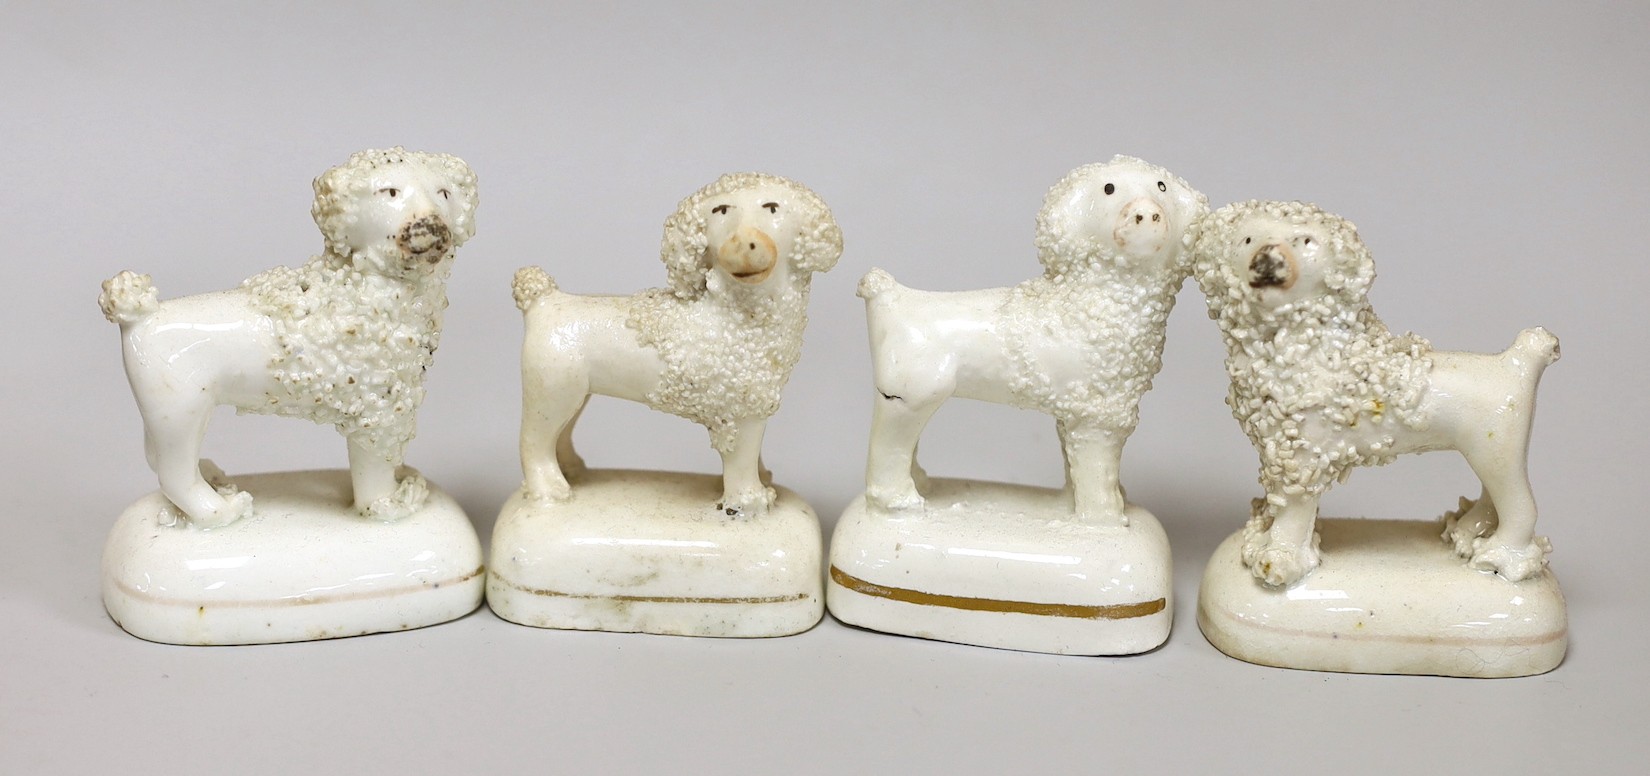 Four Staffordshire models of poodles, c.1830-50, tallest 6.5cm, Provenance: Dennis G. Rice collection                                                                                                                       